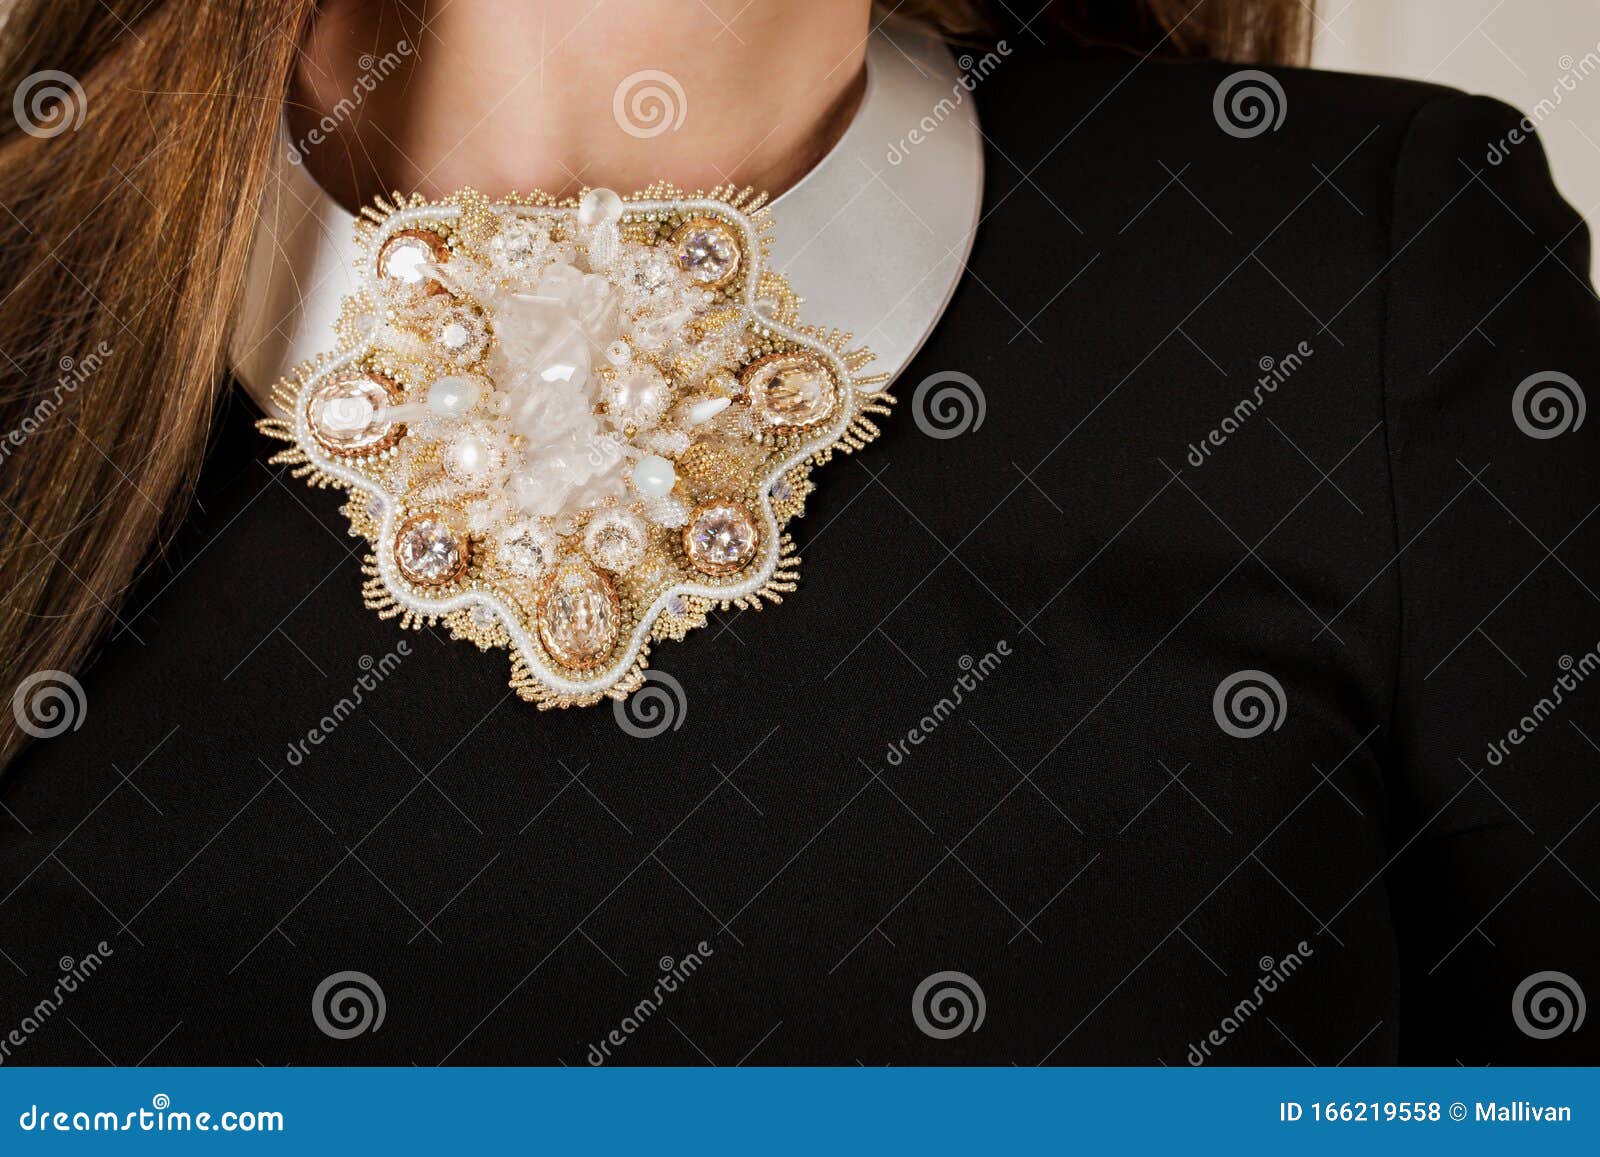 Necklace Made Of Golden Beads And Rhinestones Handmade Closeup Stock